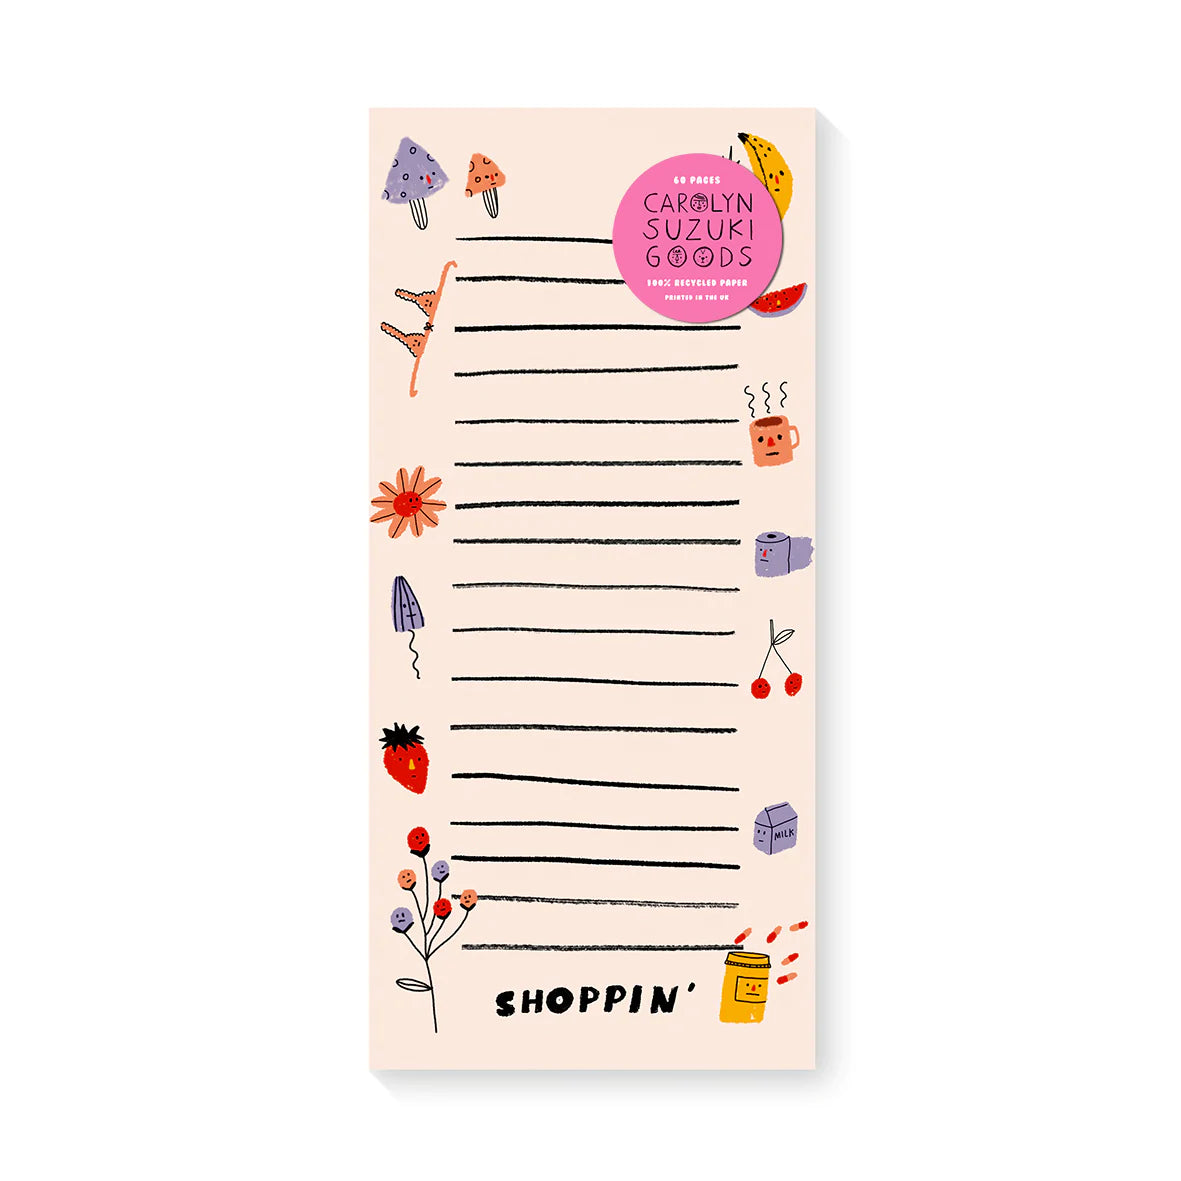 Carolyn Suzuki Goods - Shoppin' List Notepad